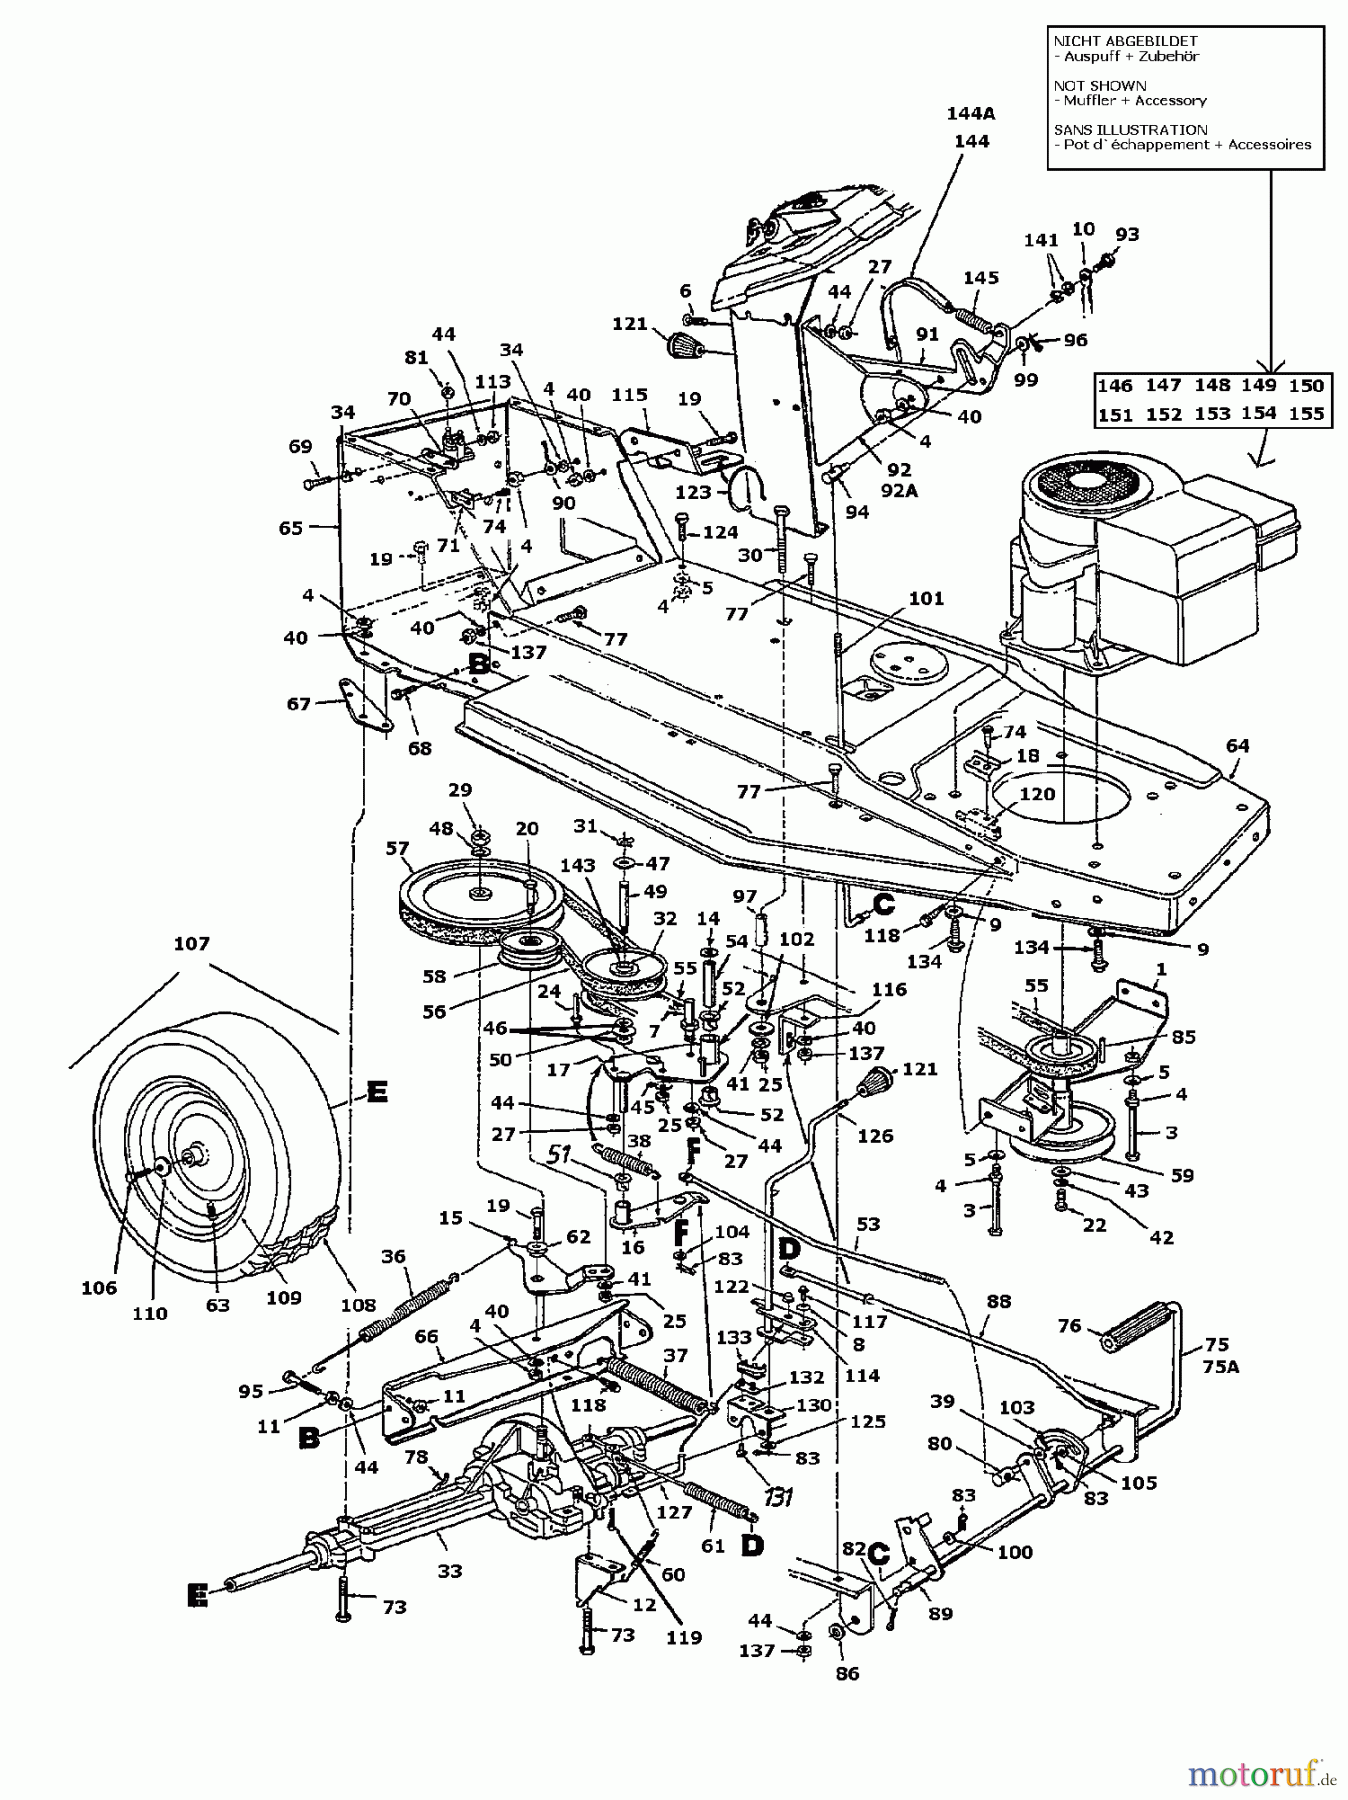  Bauhaus Lawn tractors Gardol Topcut 12/91 134I471E646  (1994) Drive system, Engine pulley, Pedal, Rear wheels